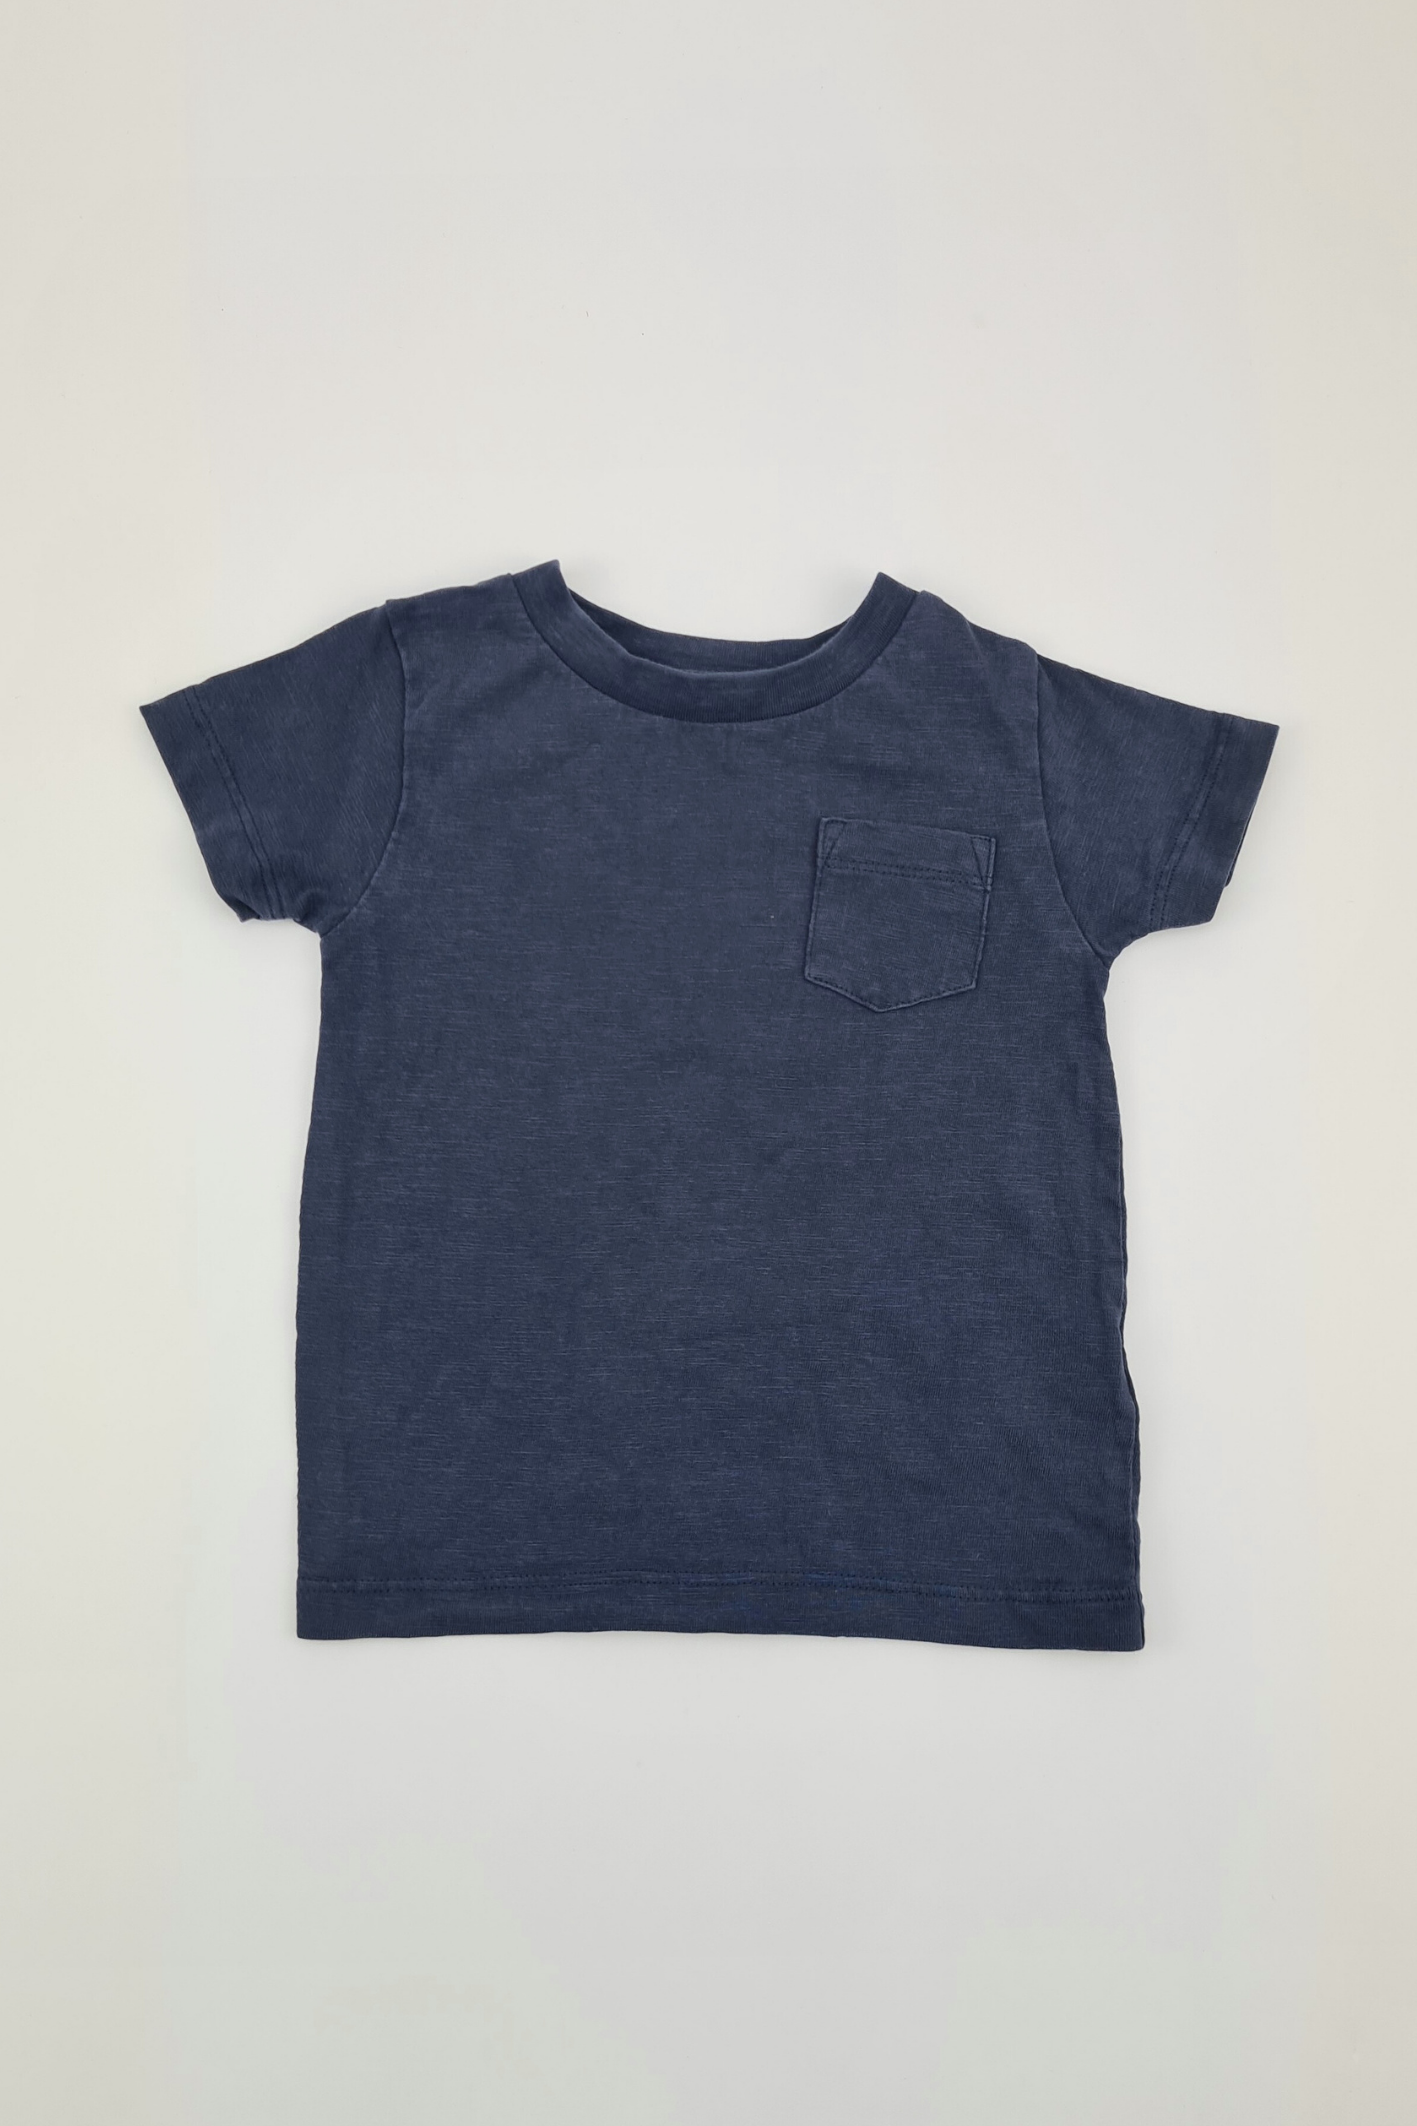 6-9m - T-shirt bleu marine (Suivant)